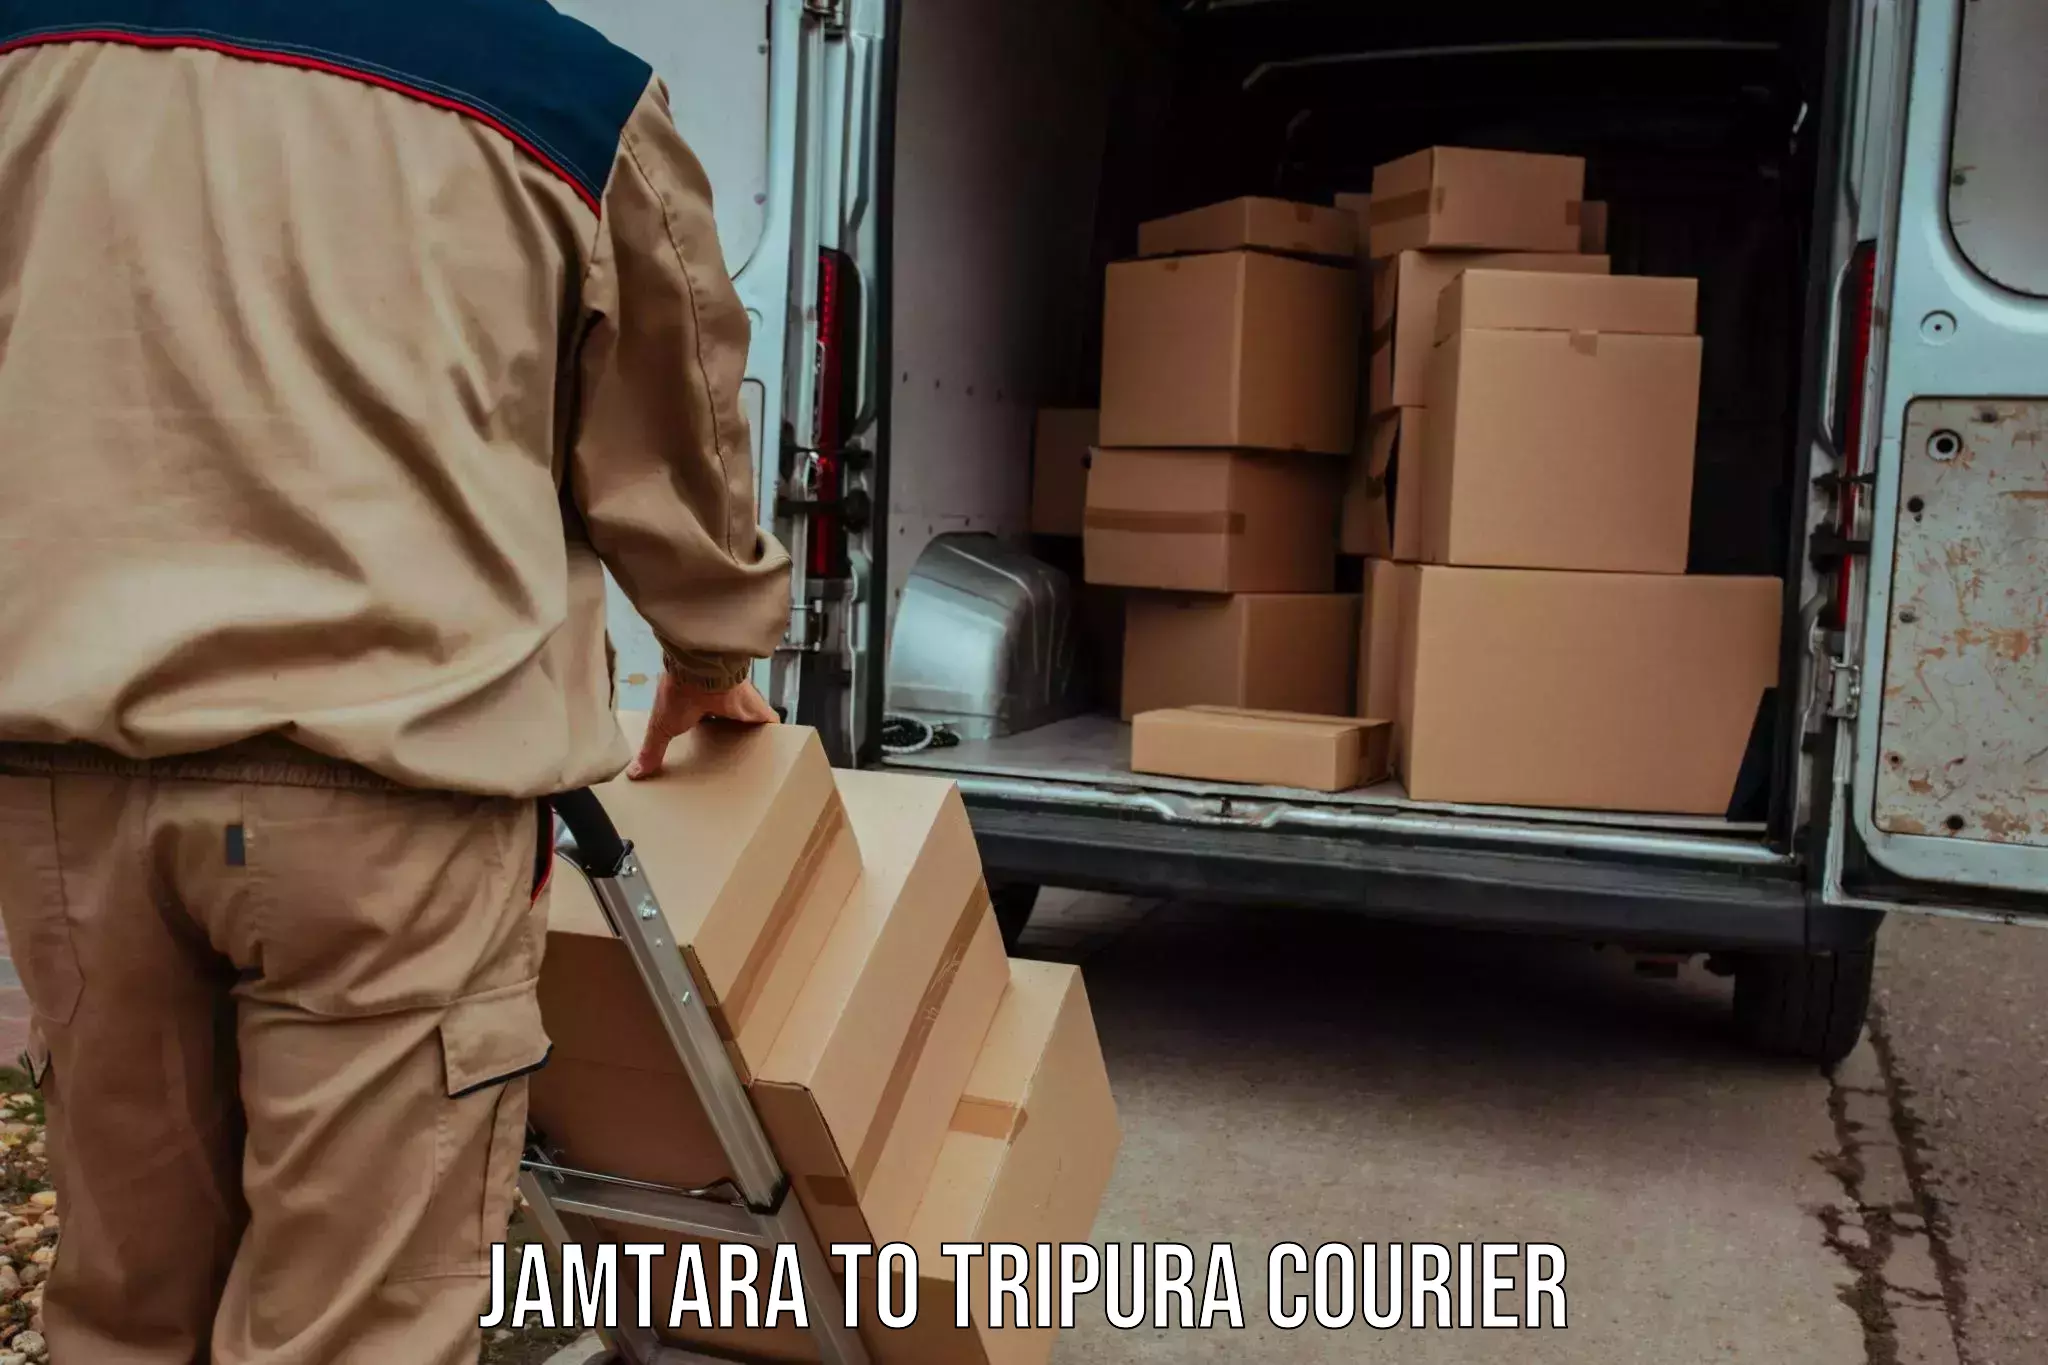 User-friendly courier app Jamtara to Aambasa